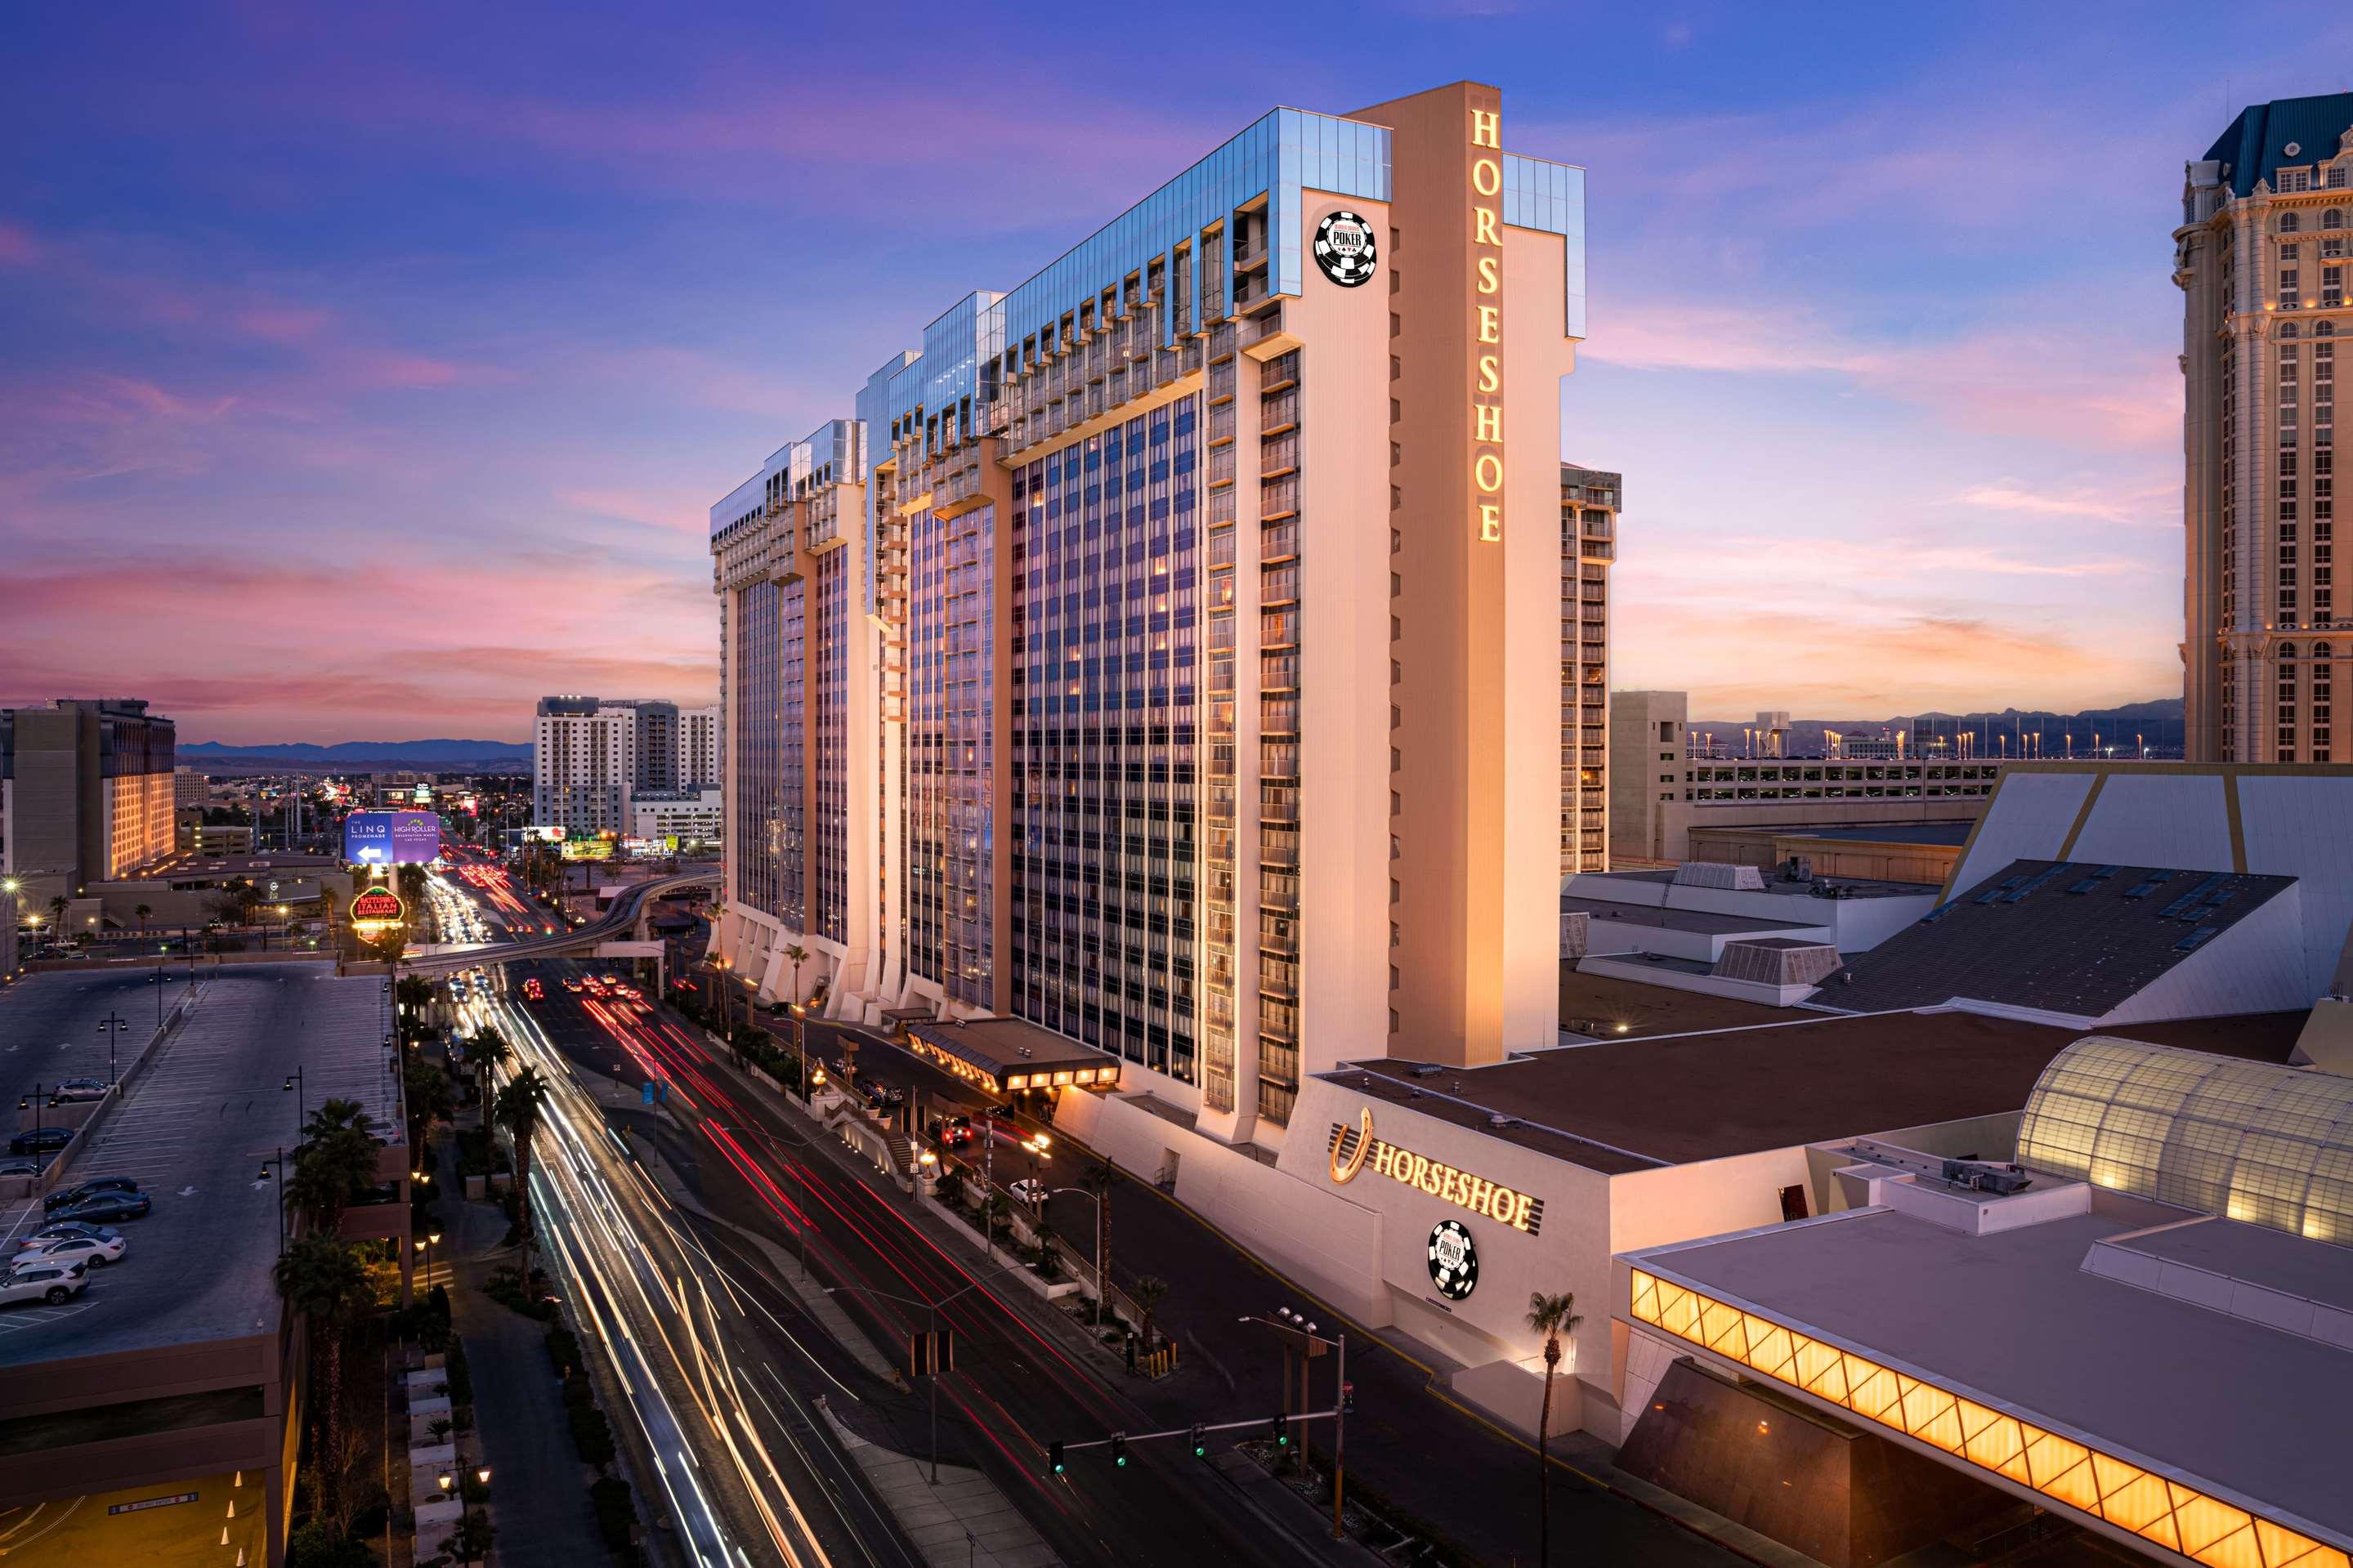 Paris Las Vegas Hotel & Casino - Starting From $59 - Best Deals at